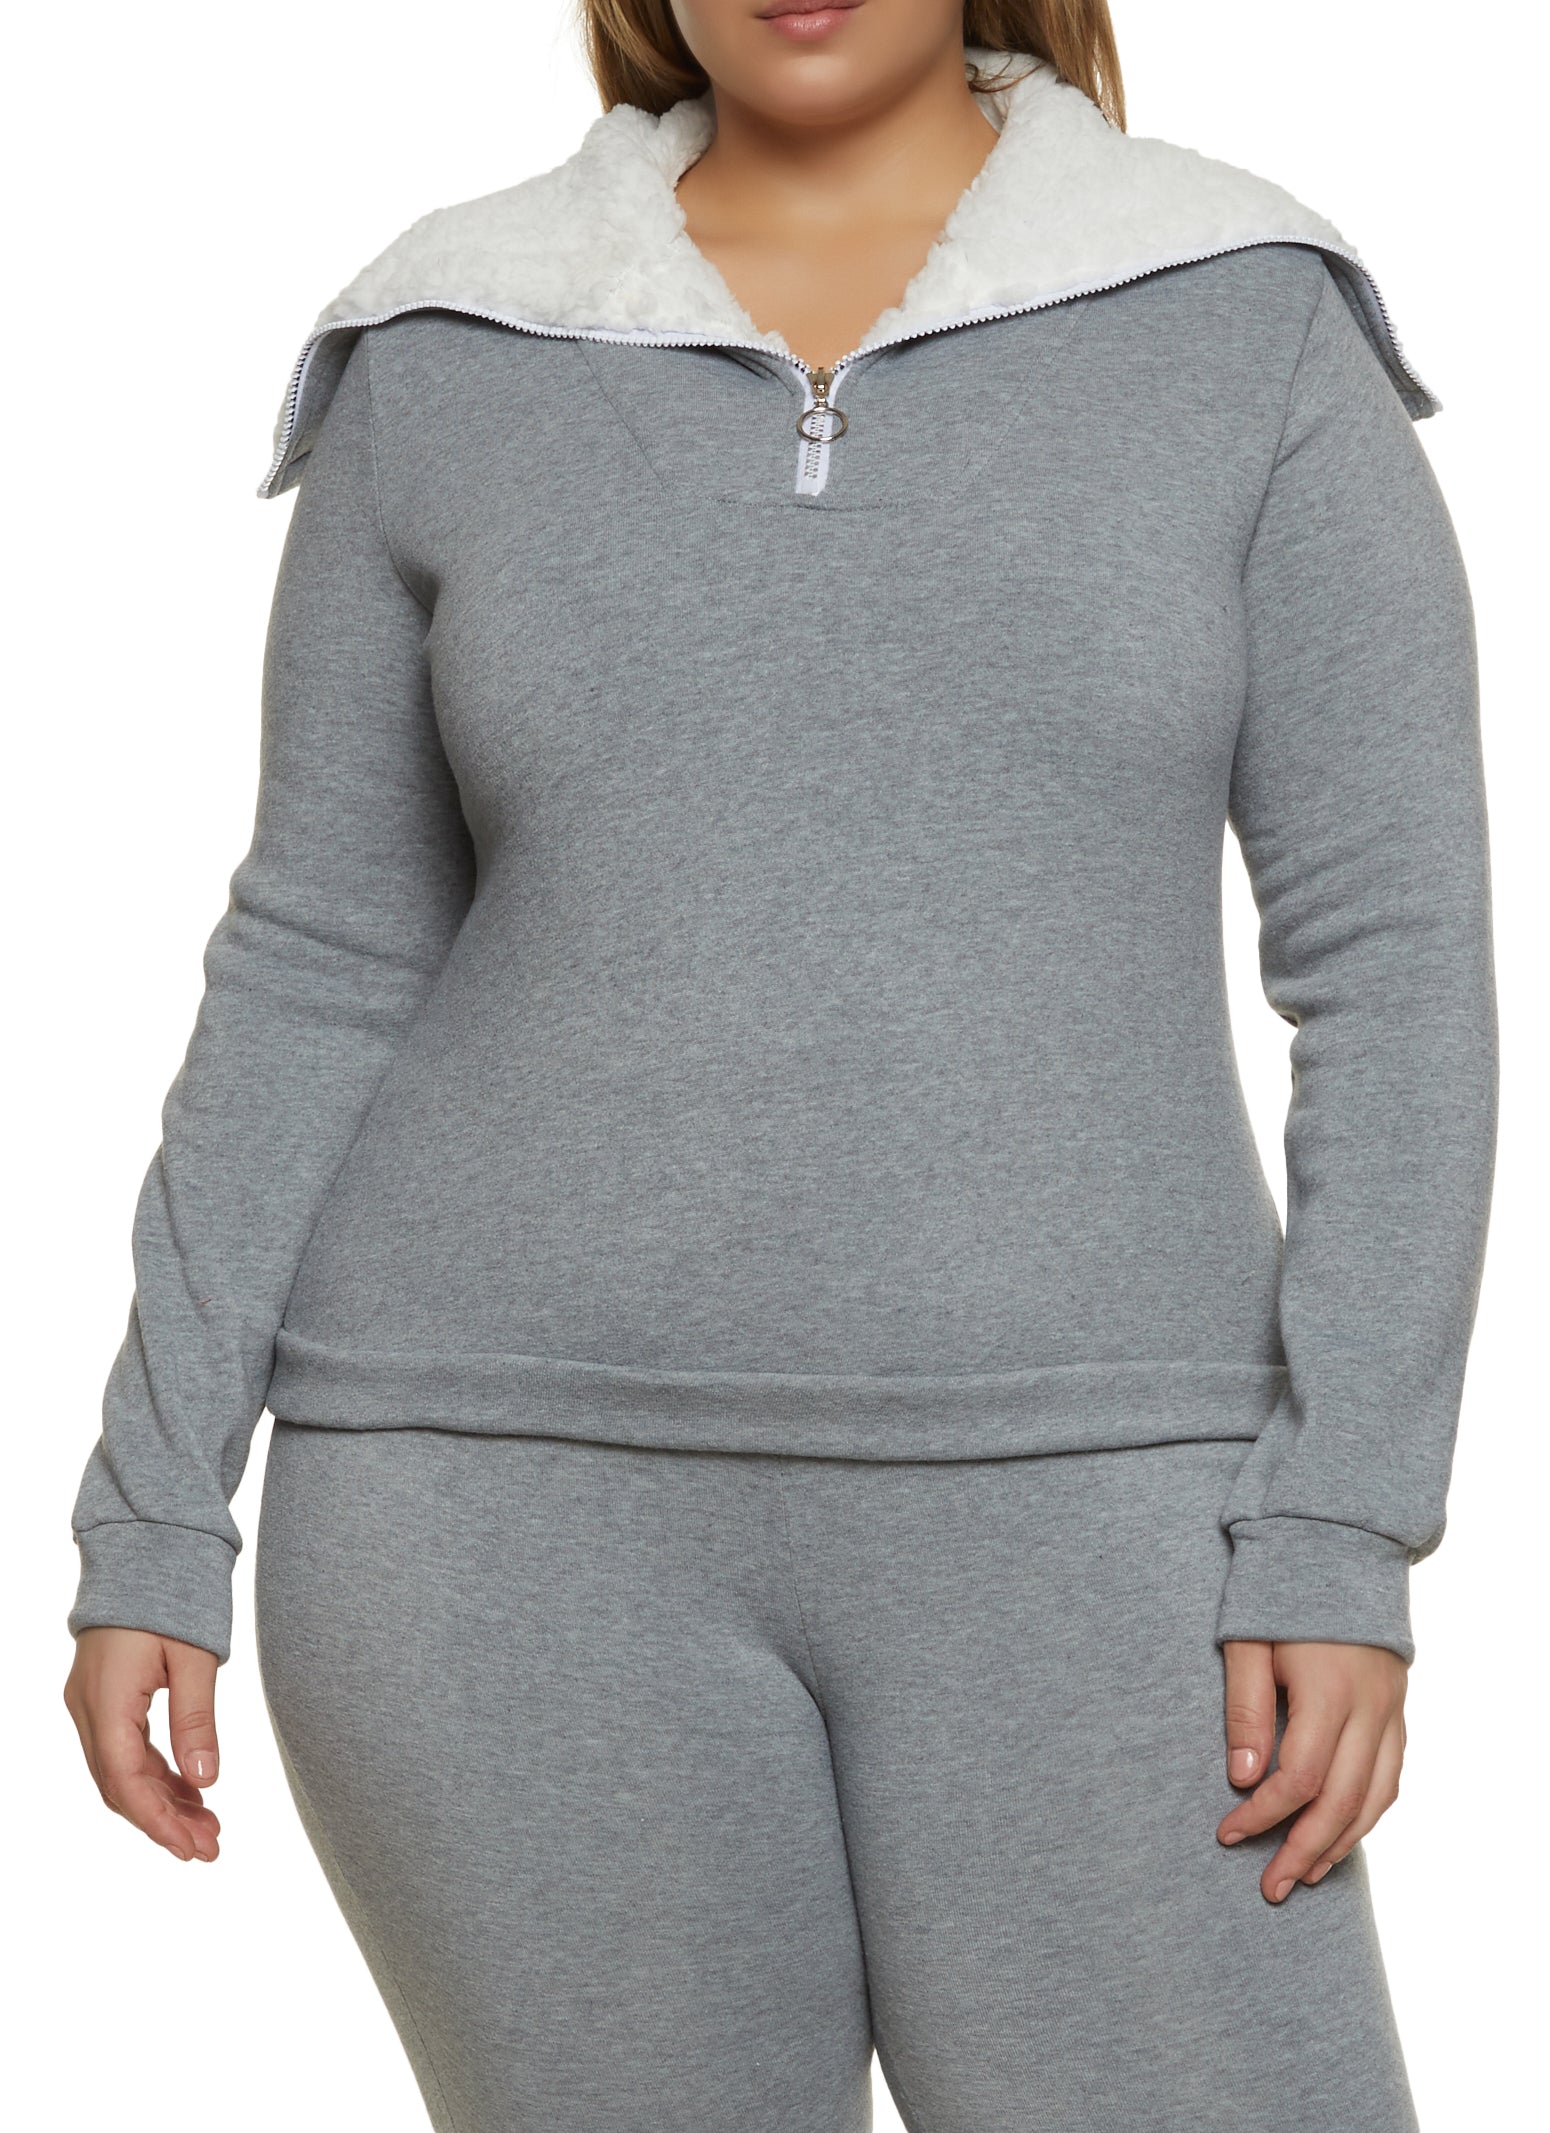 Womens Plus Size Sherpa Lined Collar Half Zip Sweatshirt, Grey, Size 2X